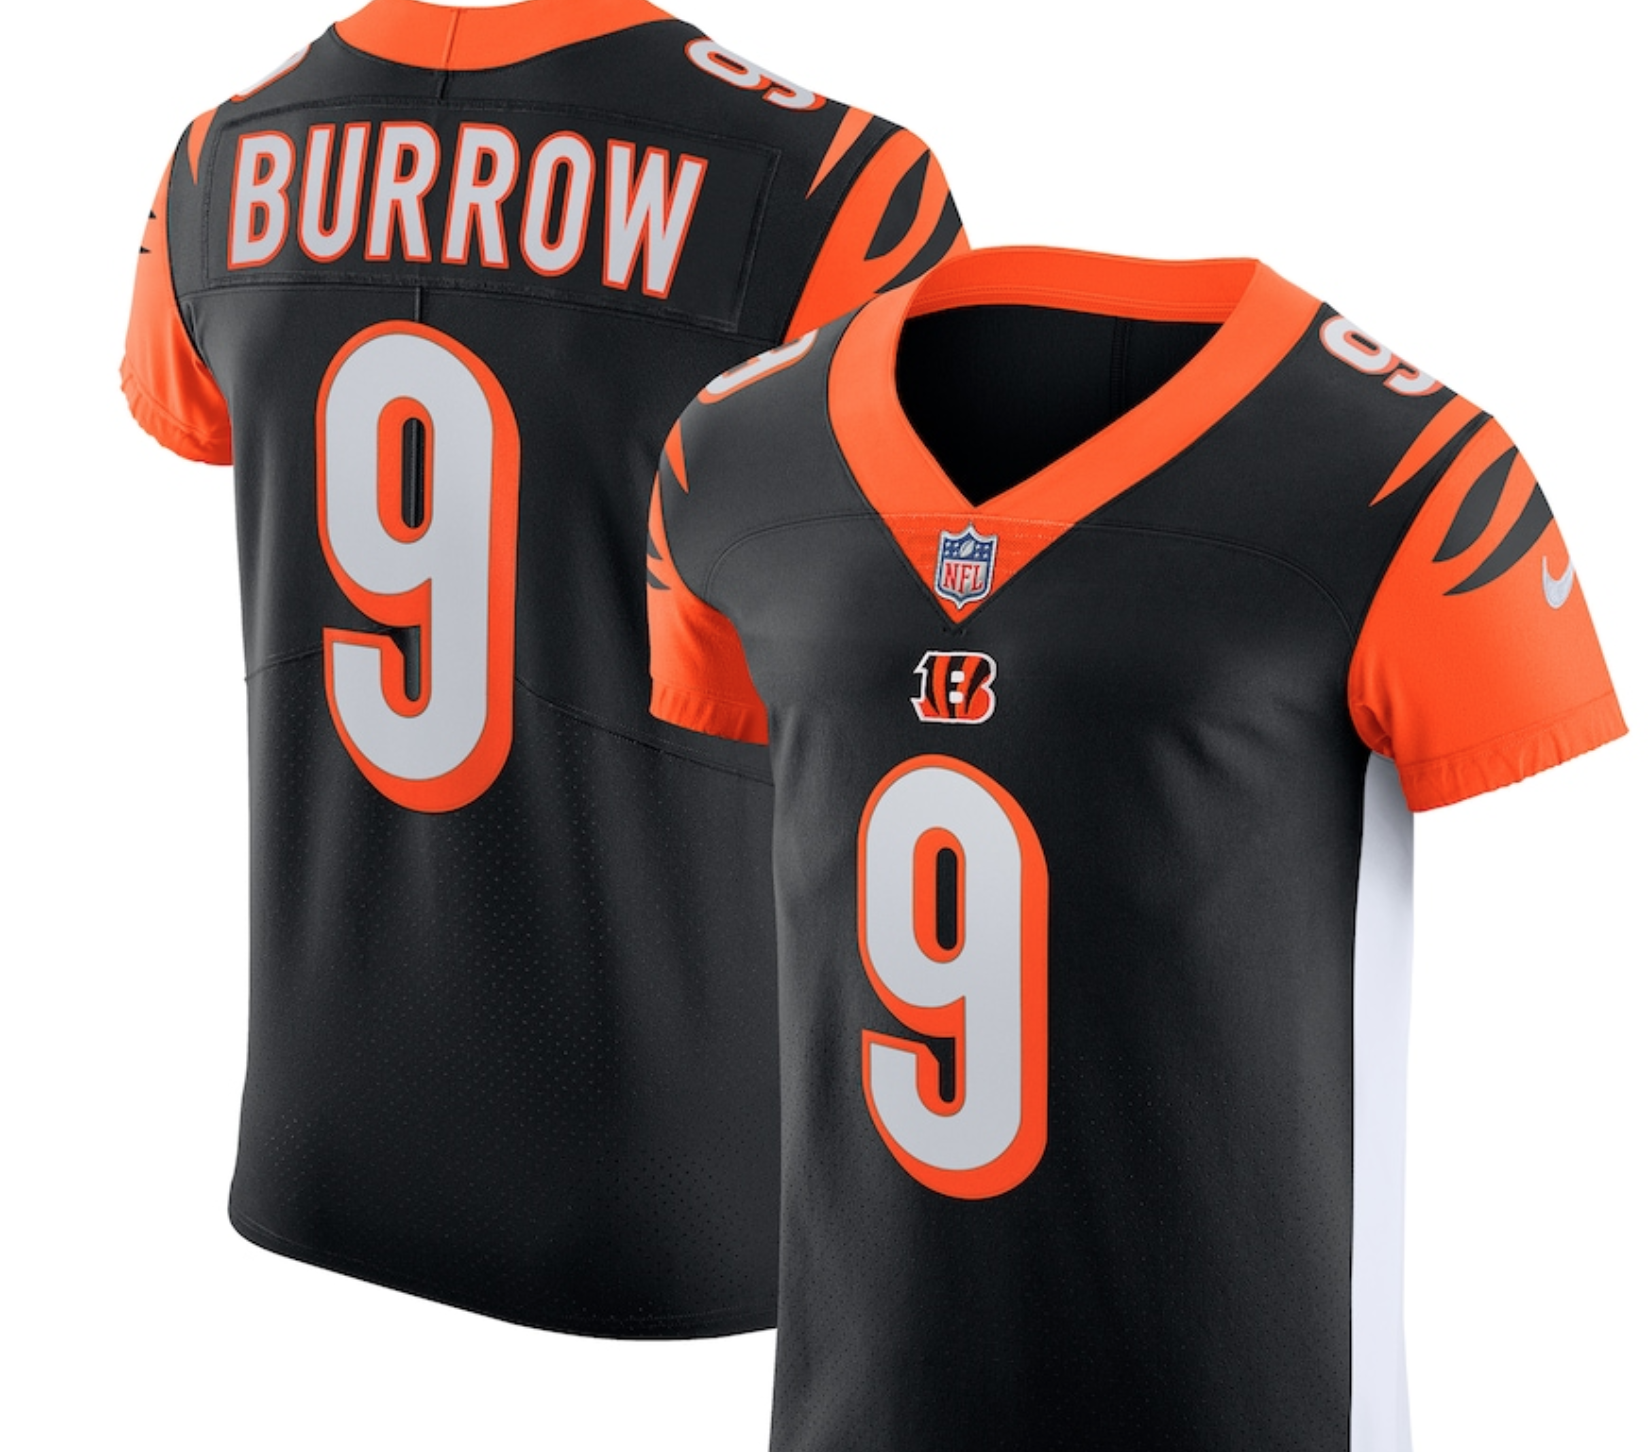 Joe Burrow Jersey, Cincinnati Bengals Jerseys, Where to get them